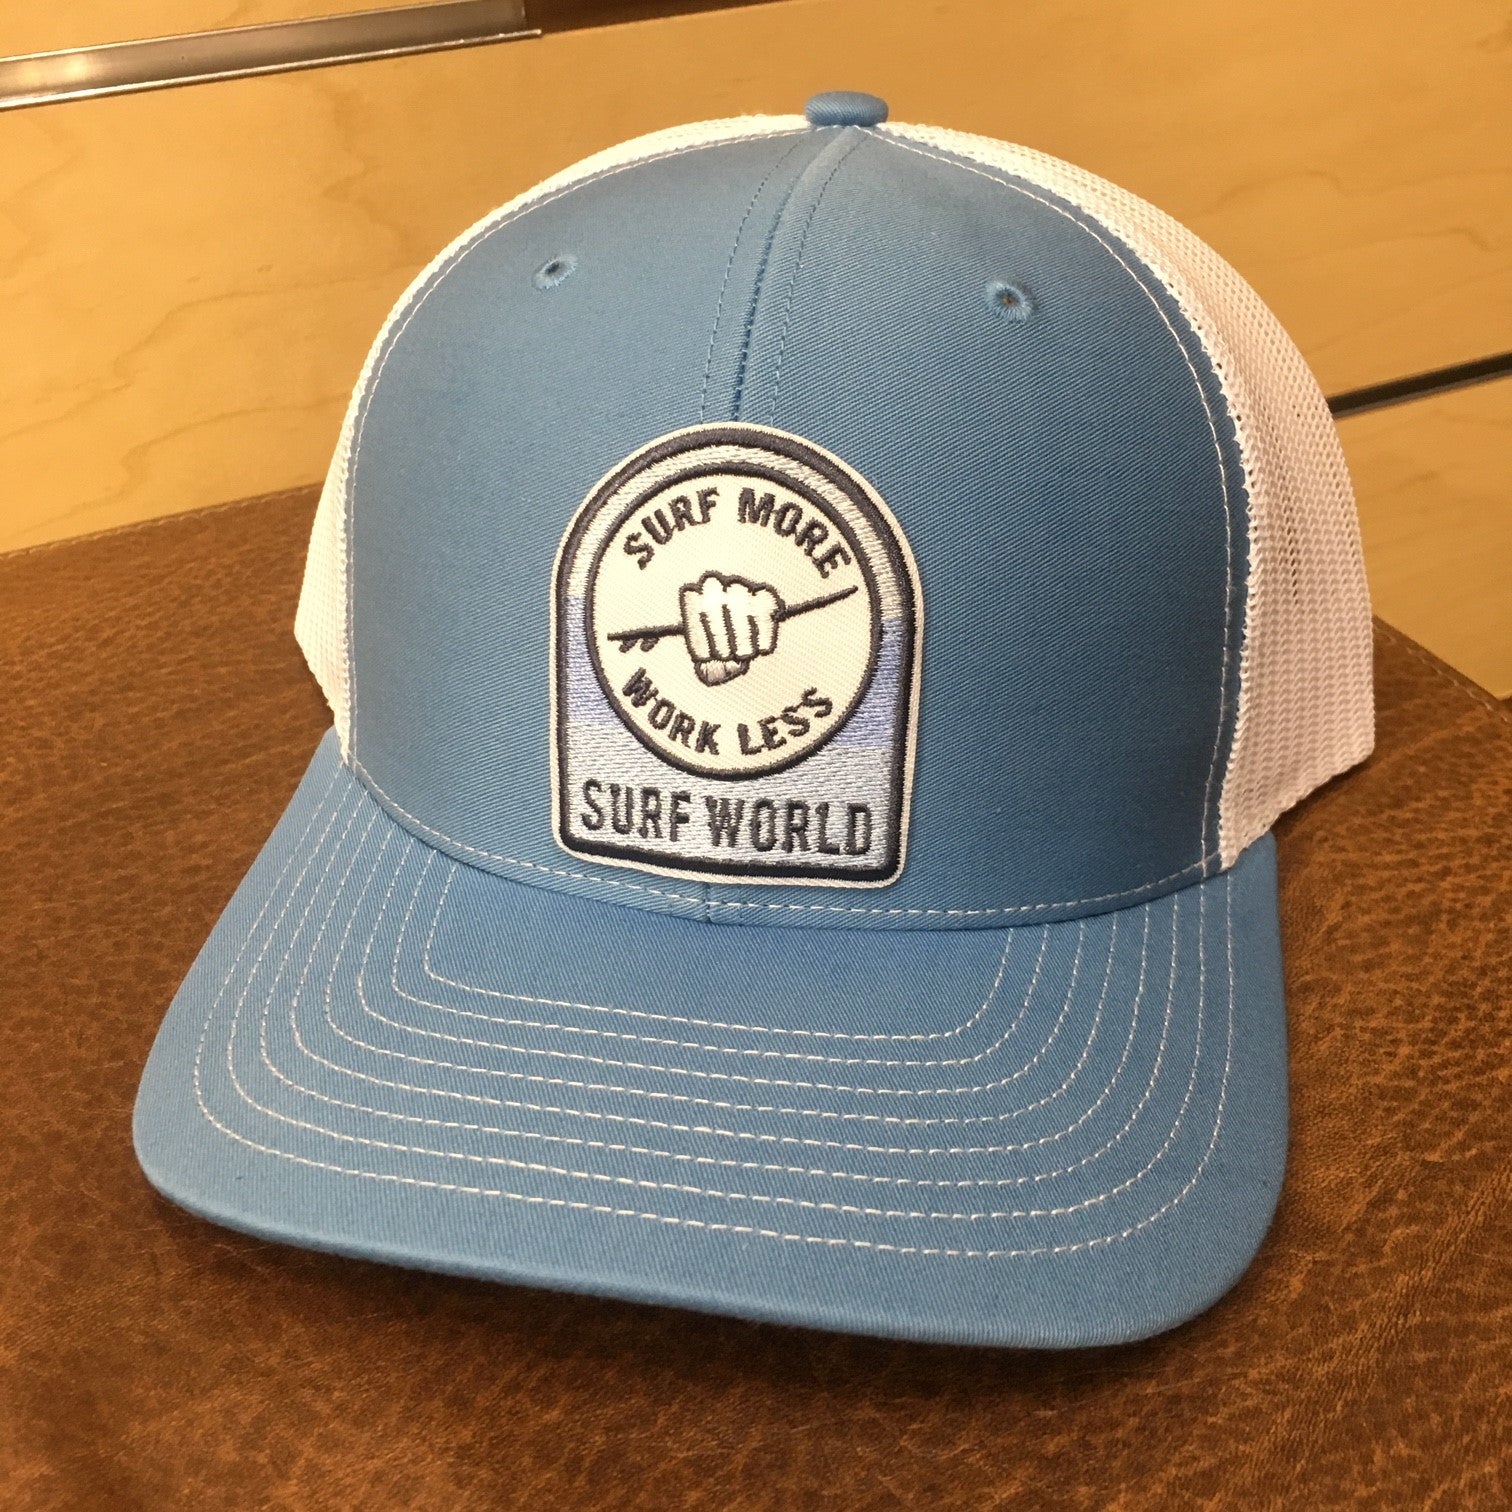 Surf World Surf More Work Less Trucker Hats Mens Hat Light Blue